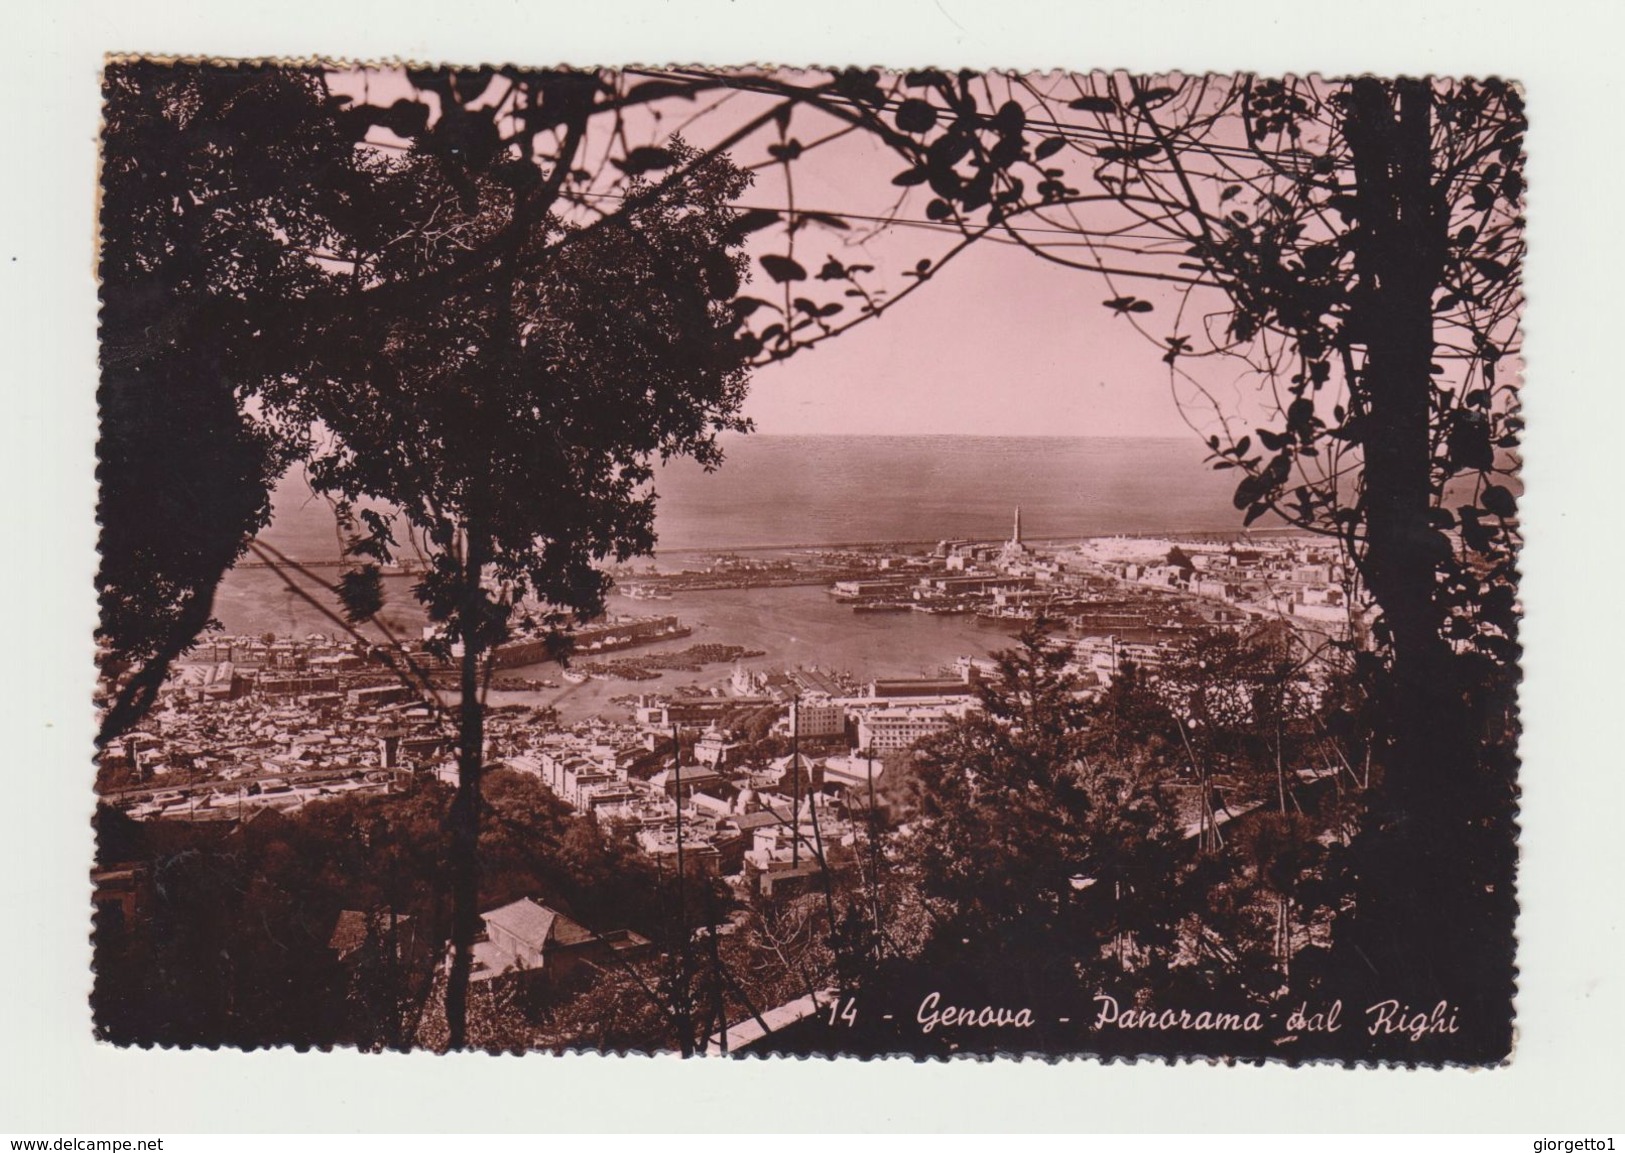 GENOVA - PANORAMA DEL RIGHI - VERA FOTOGRAFIA - VIAGGIATA 1951 VERSO RIO DE JANEIRO  - ITALY POSTCARD - Genova